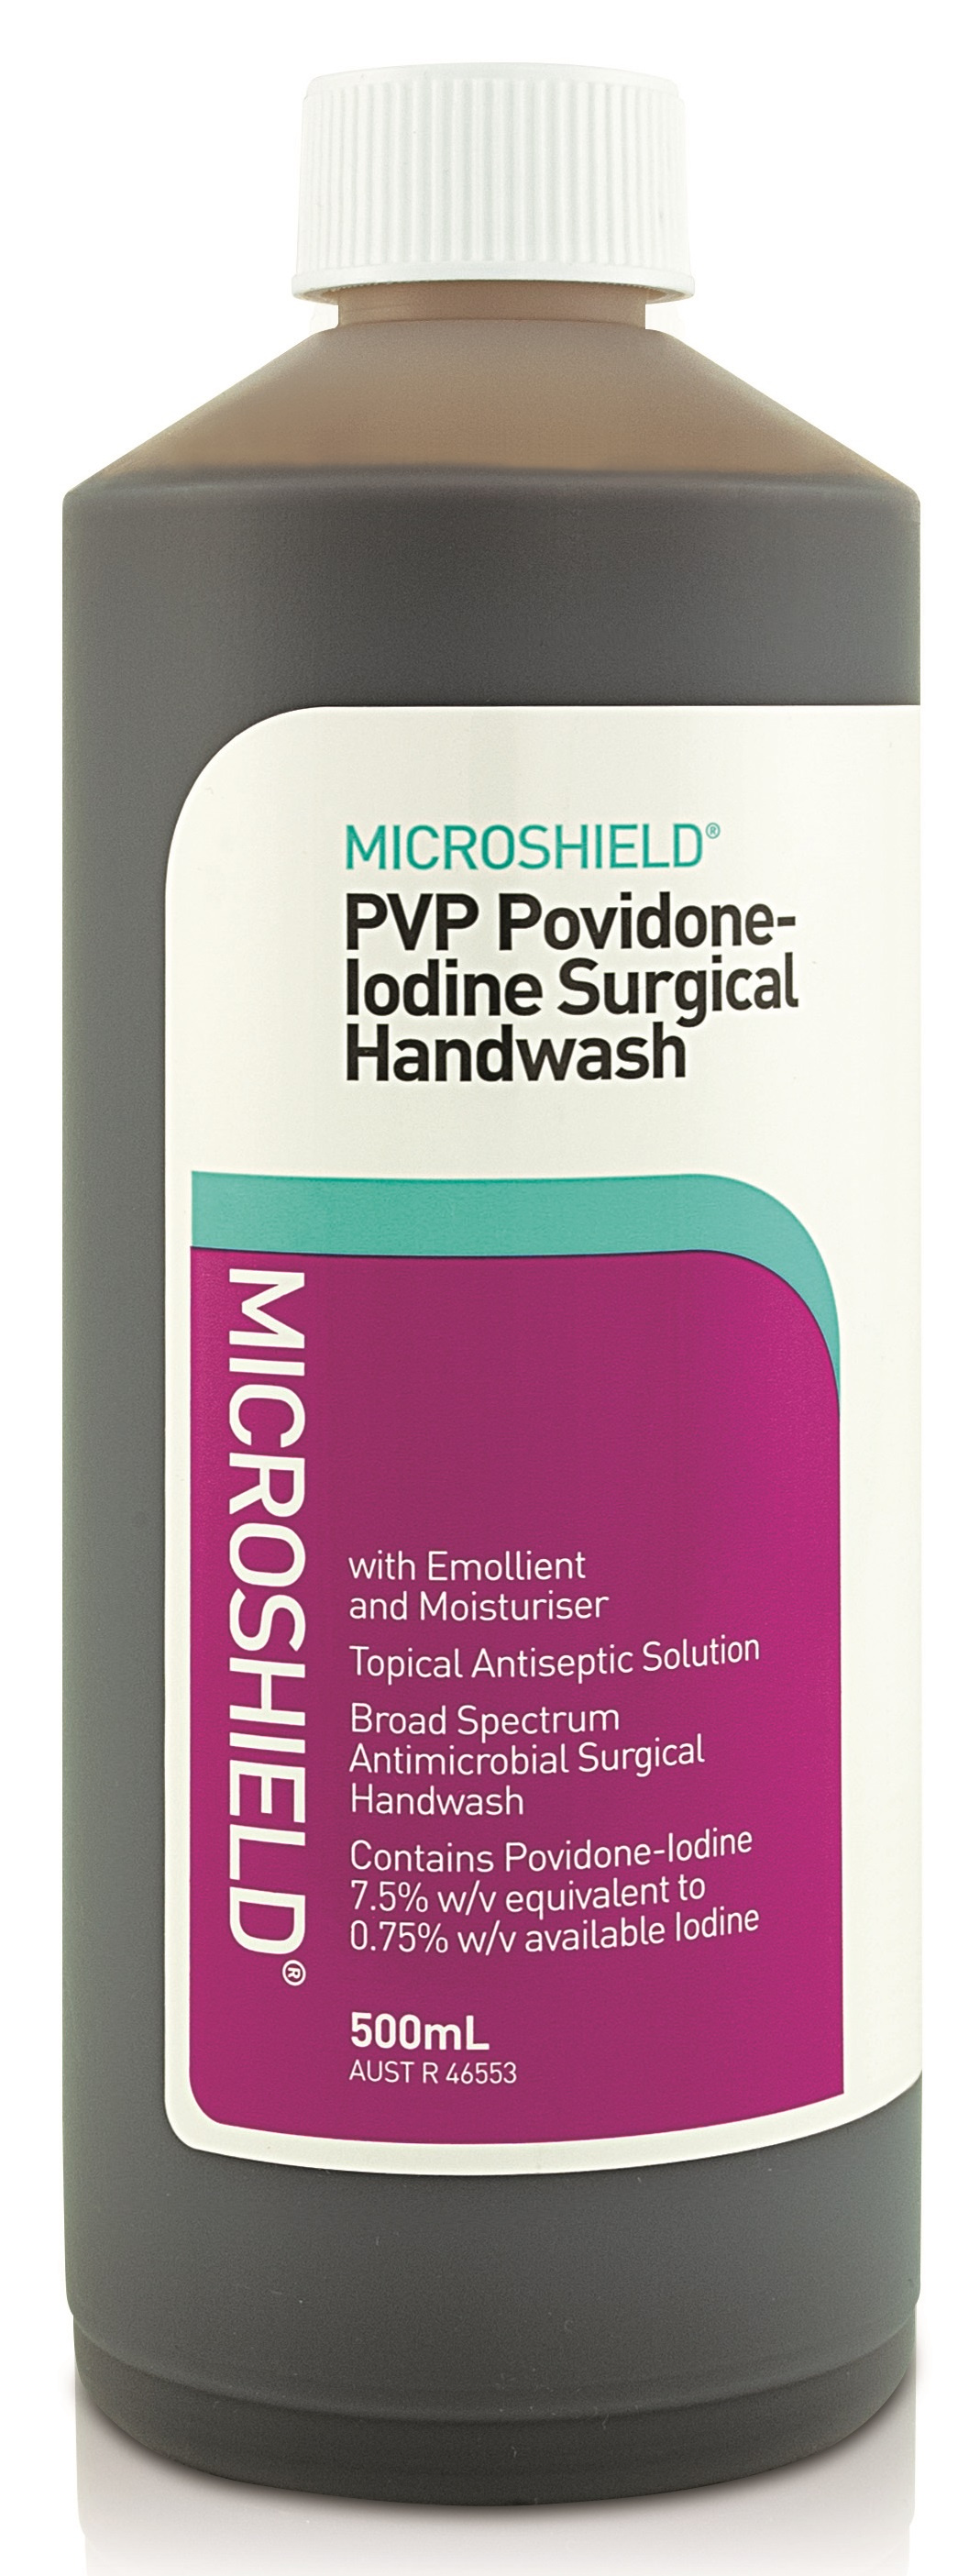 Microshield Povidone-Iodine Surgical Handwash 500ml image 0